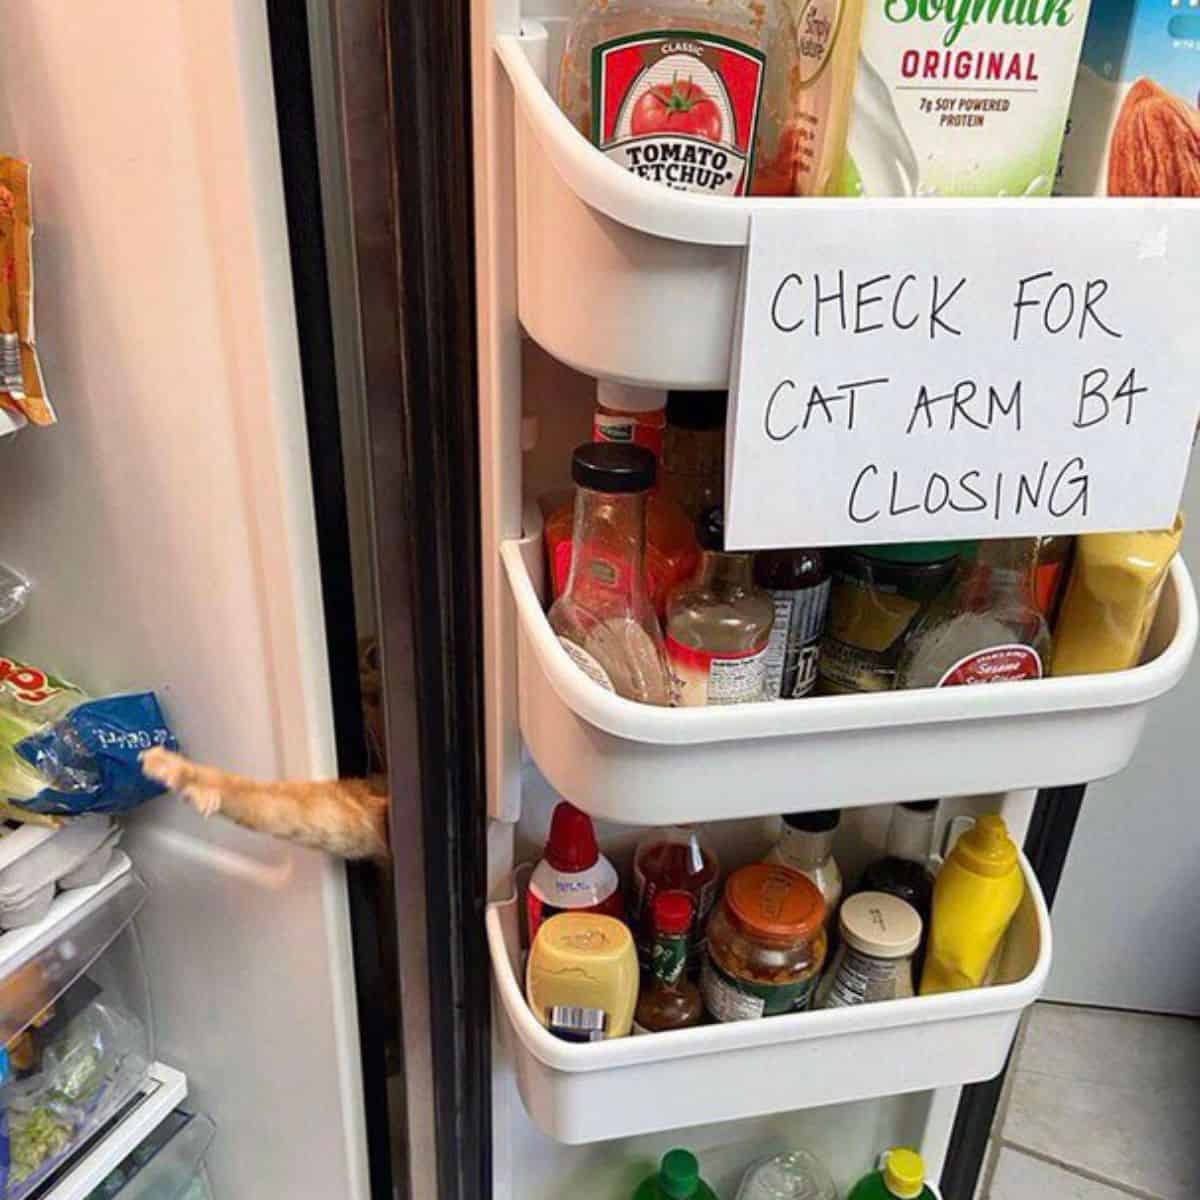 cats leg in the fridge